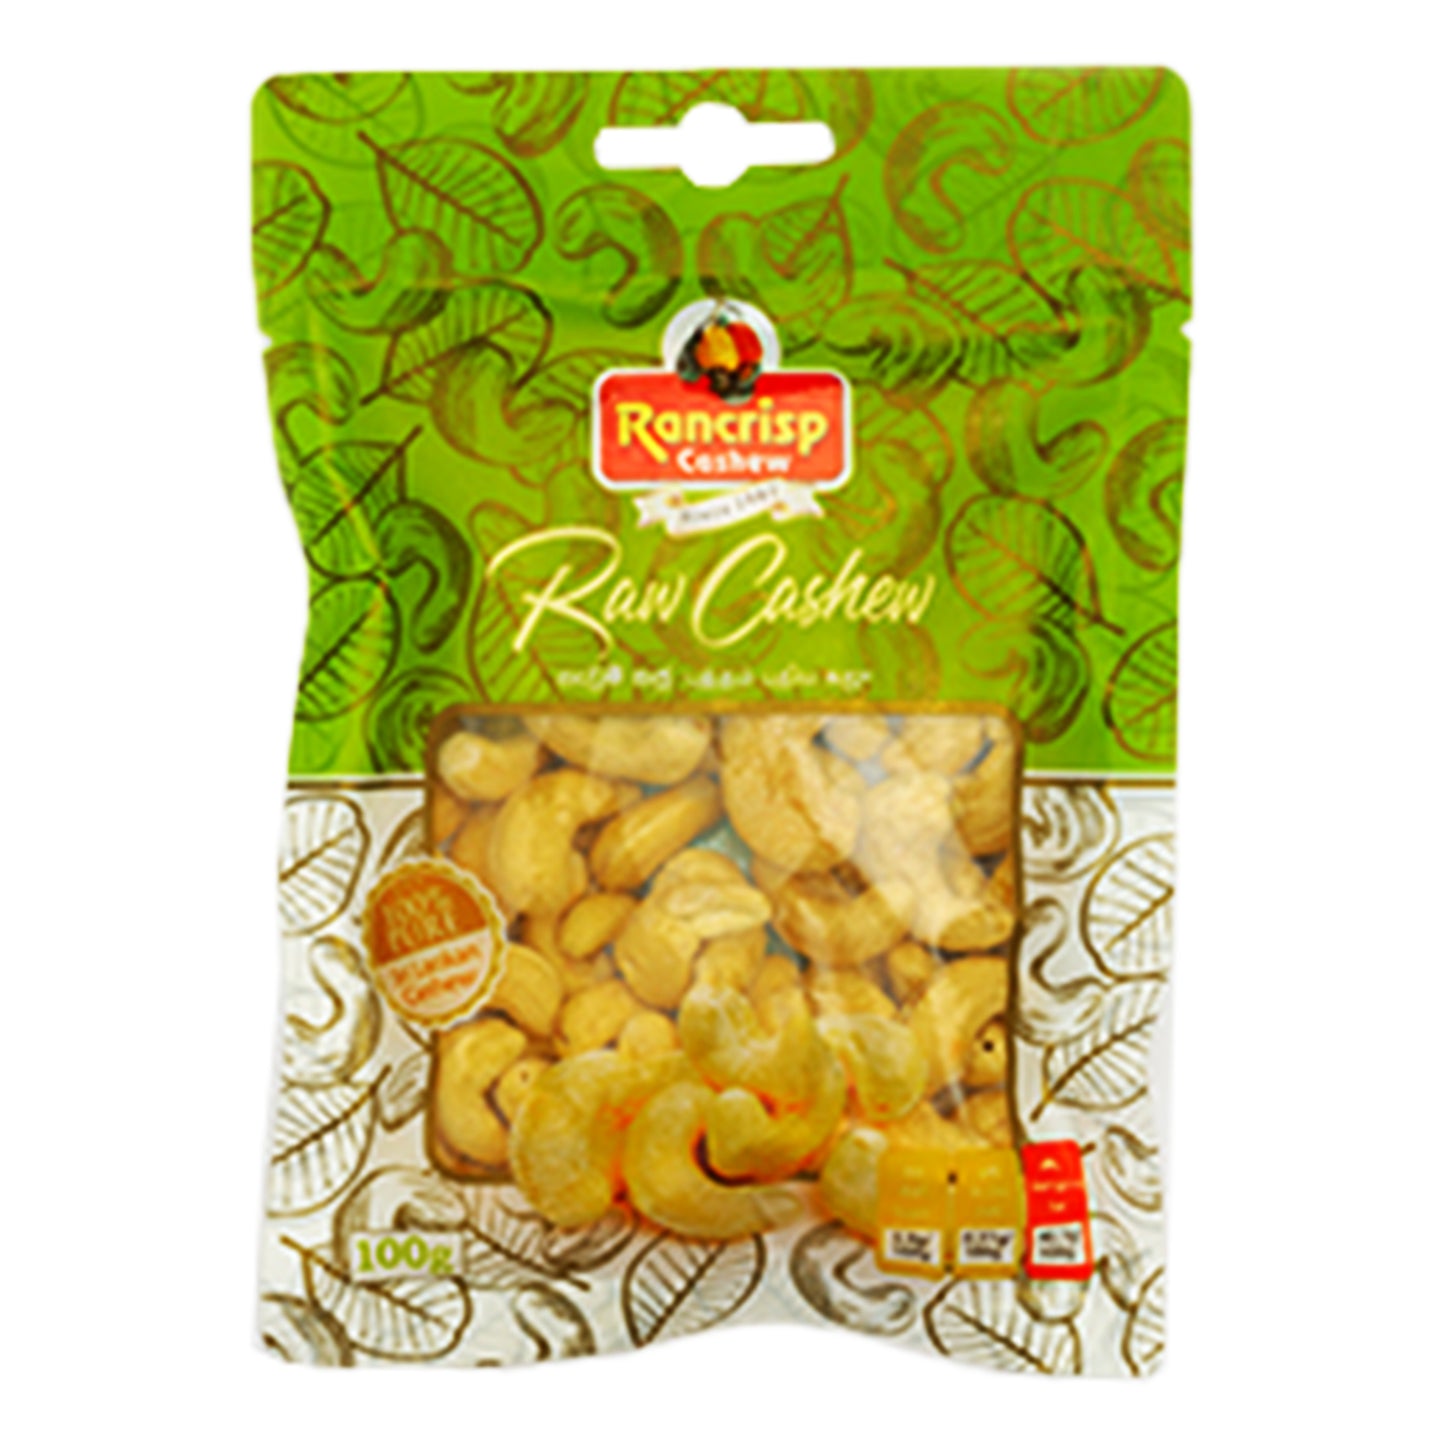 Rancrisp Raw Cashew Nuts (100g)